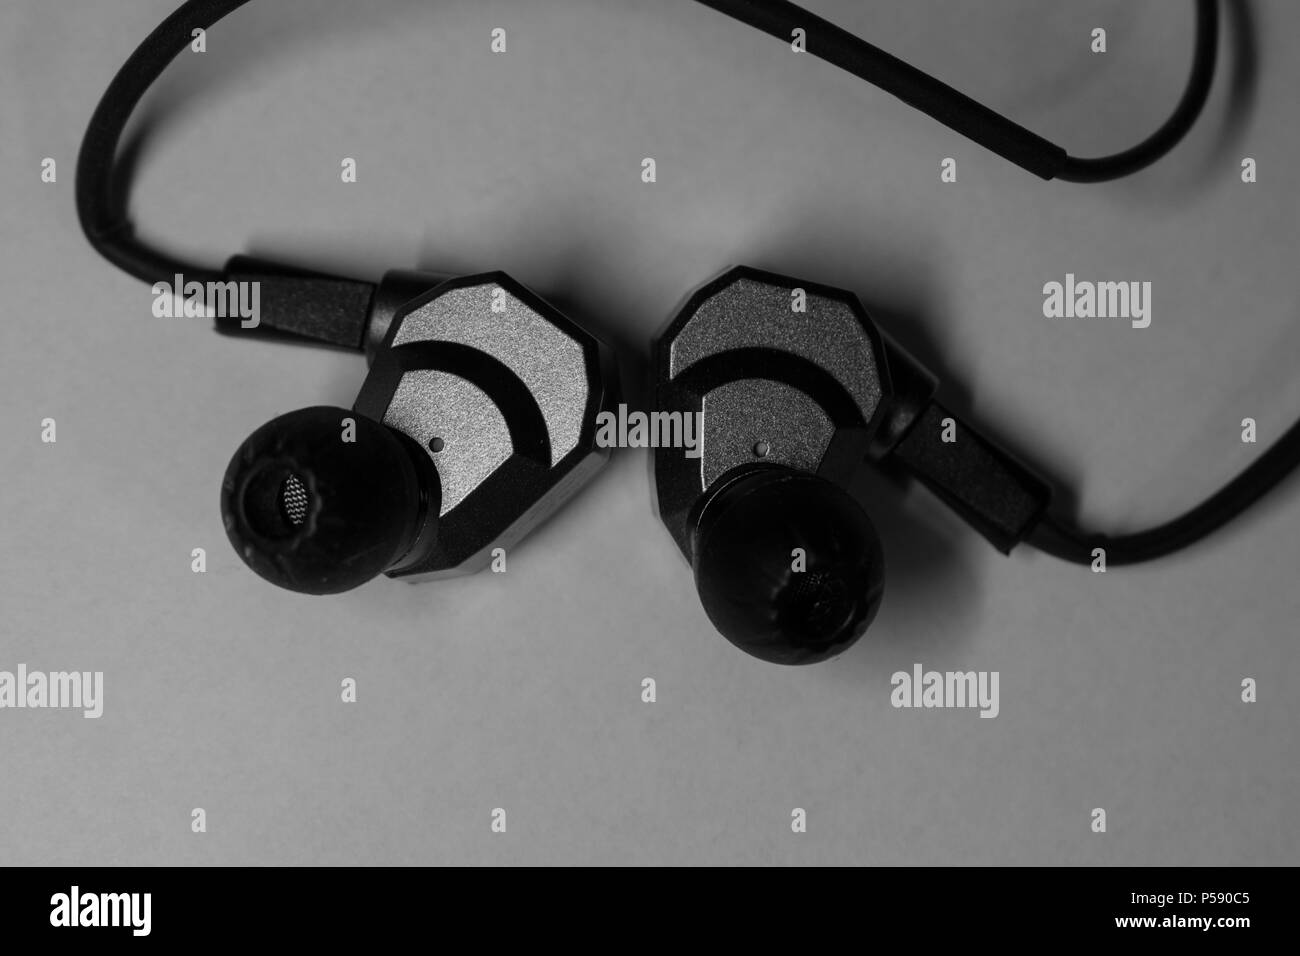 earphones and headphones Stock Photo